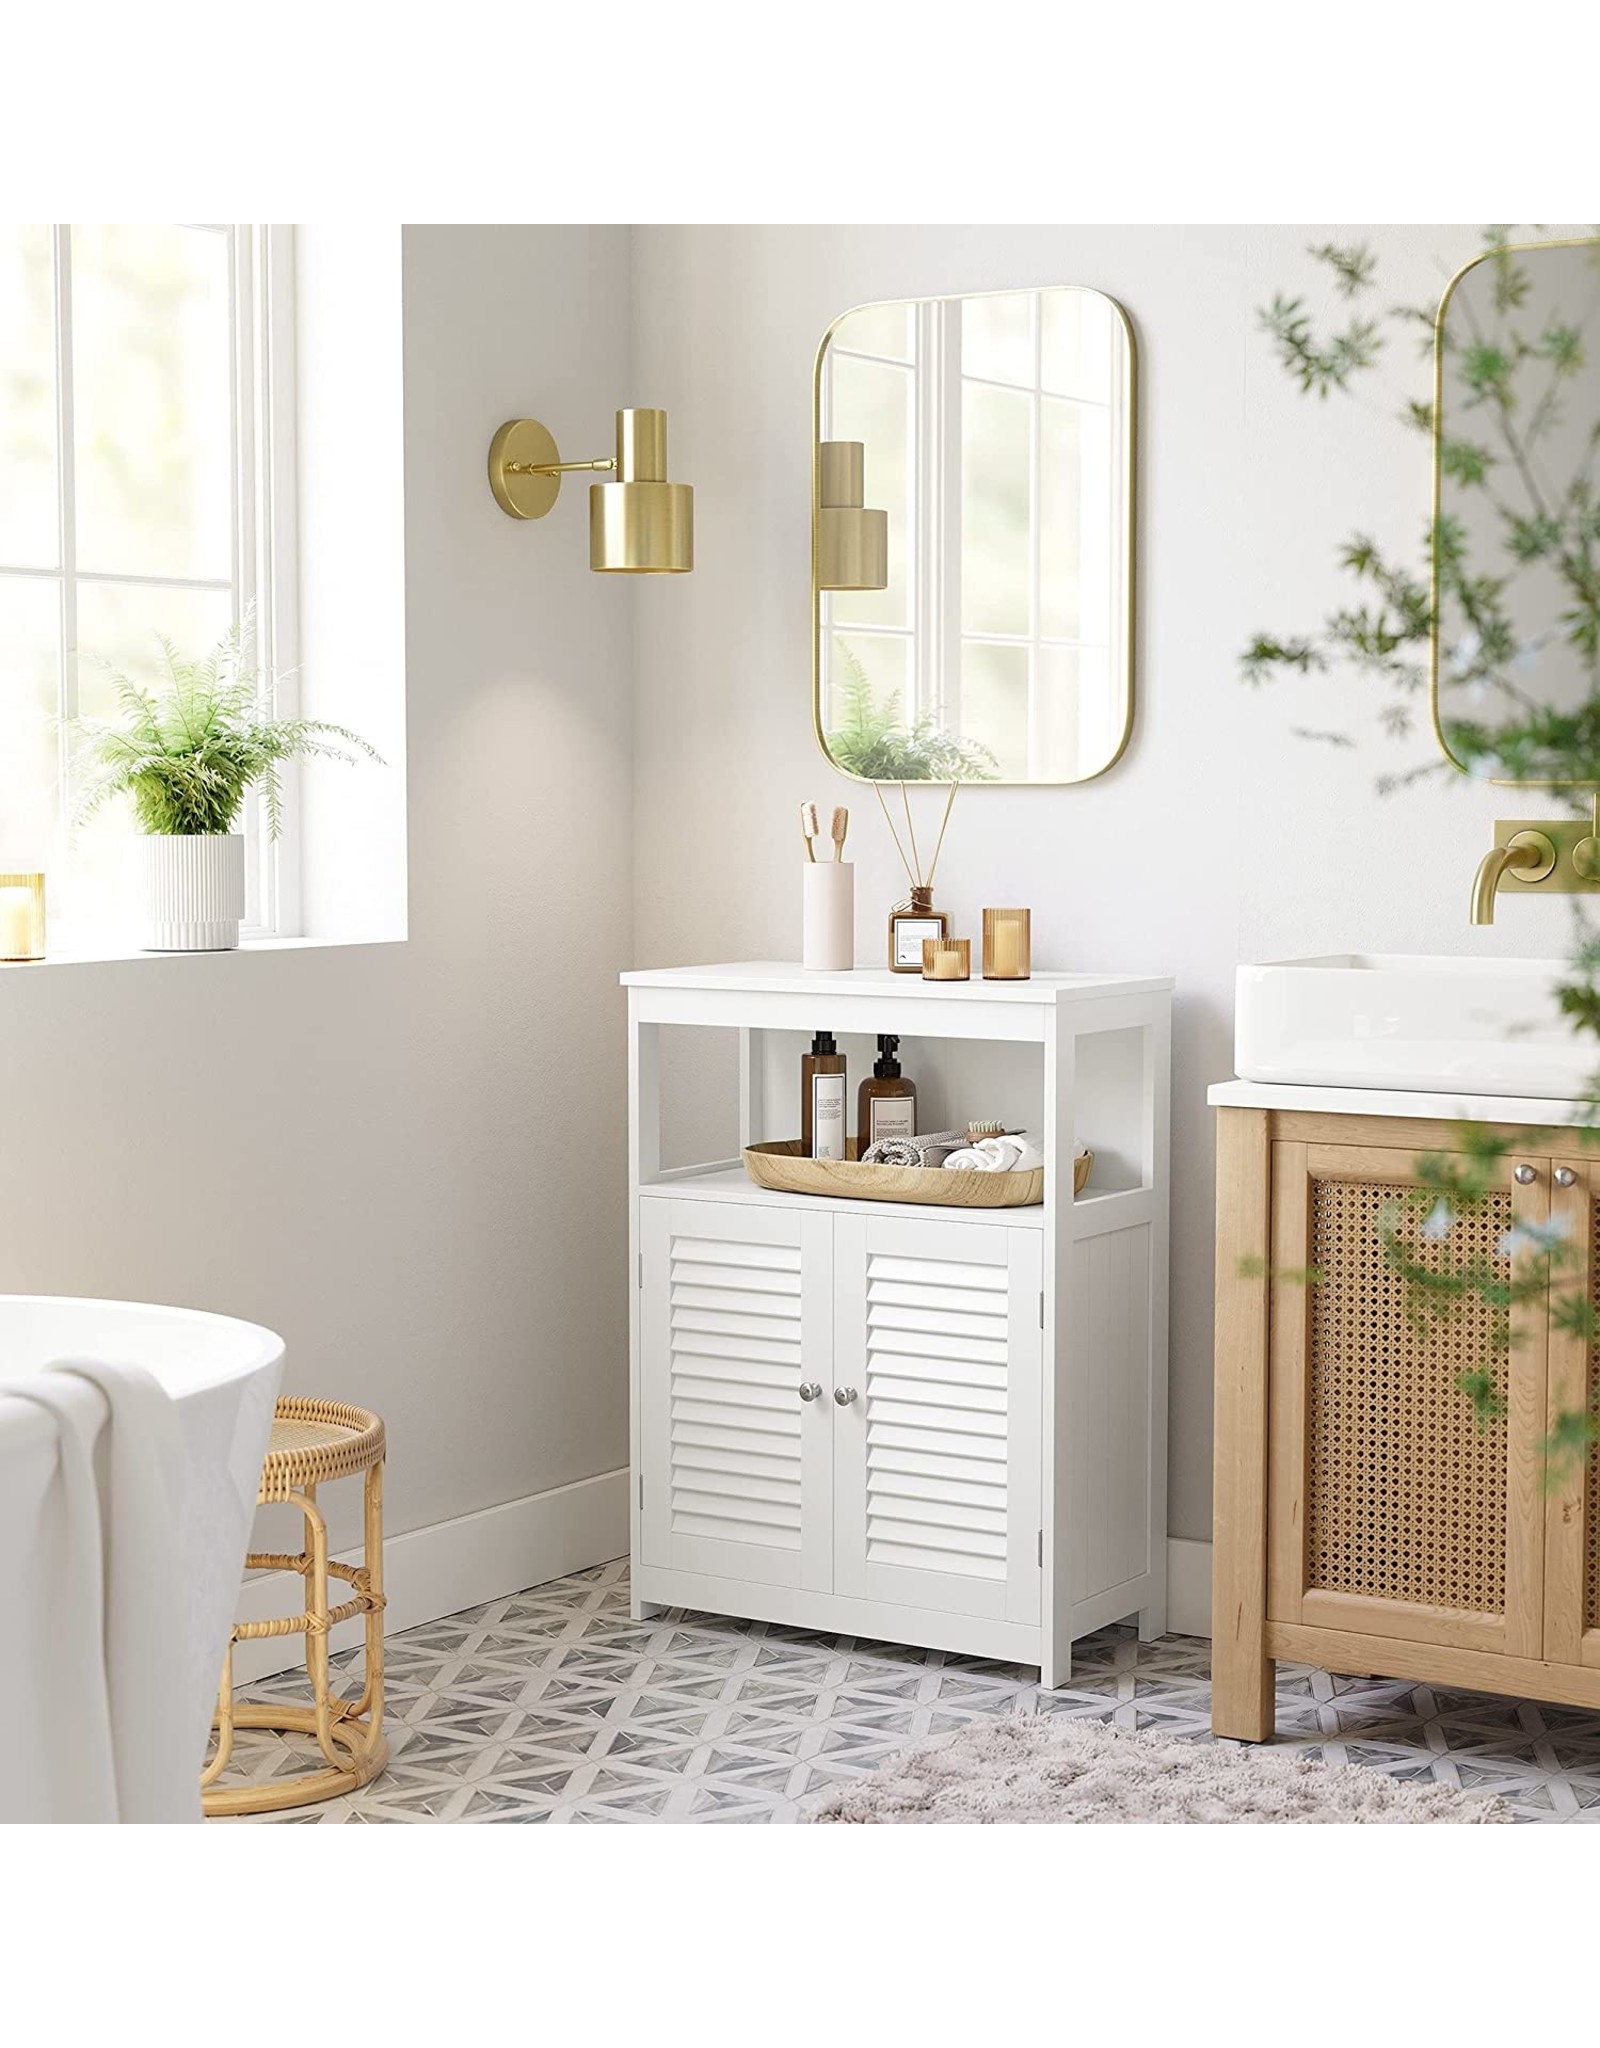 Parya Home Parya Home - White Bathroom Cabinet - Includes 2 Slat Doors - Rustic - MDF